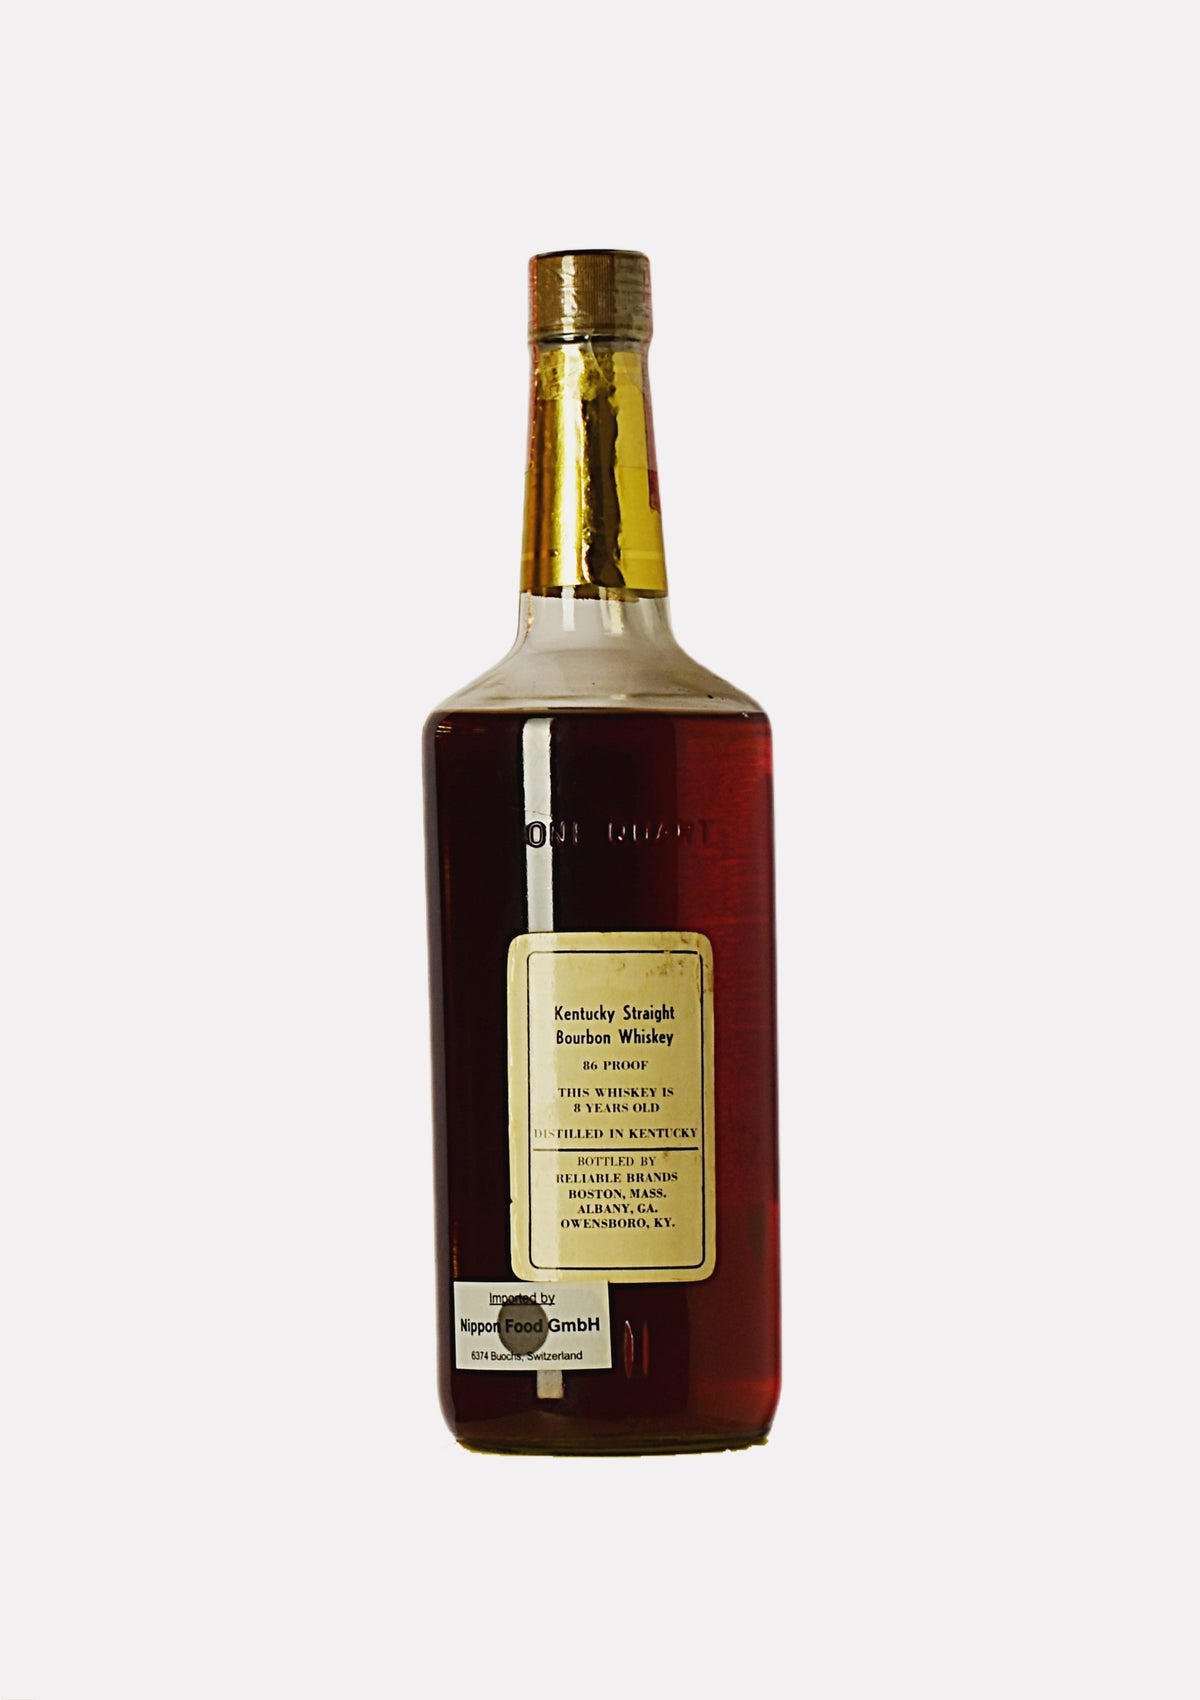 Alster`s Kentucky Straight Bourbon Whiskey 8 Jahre